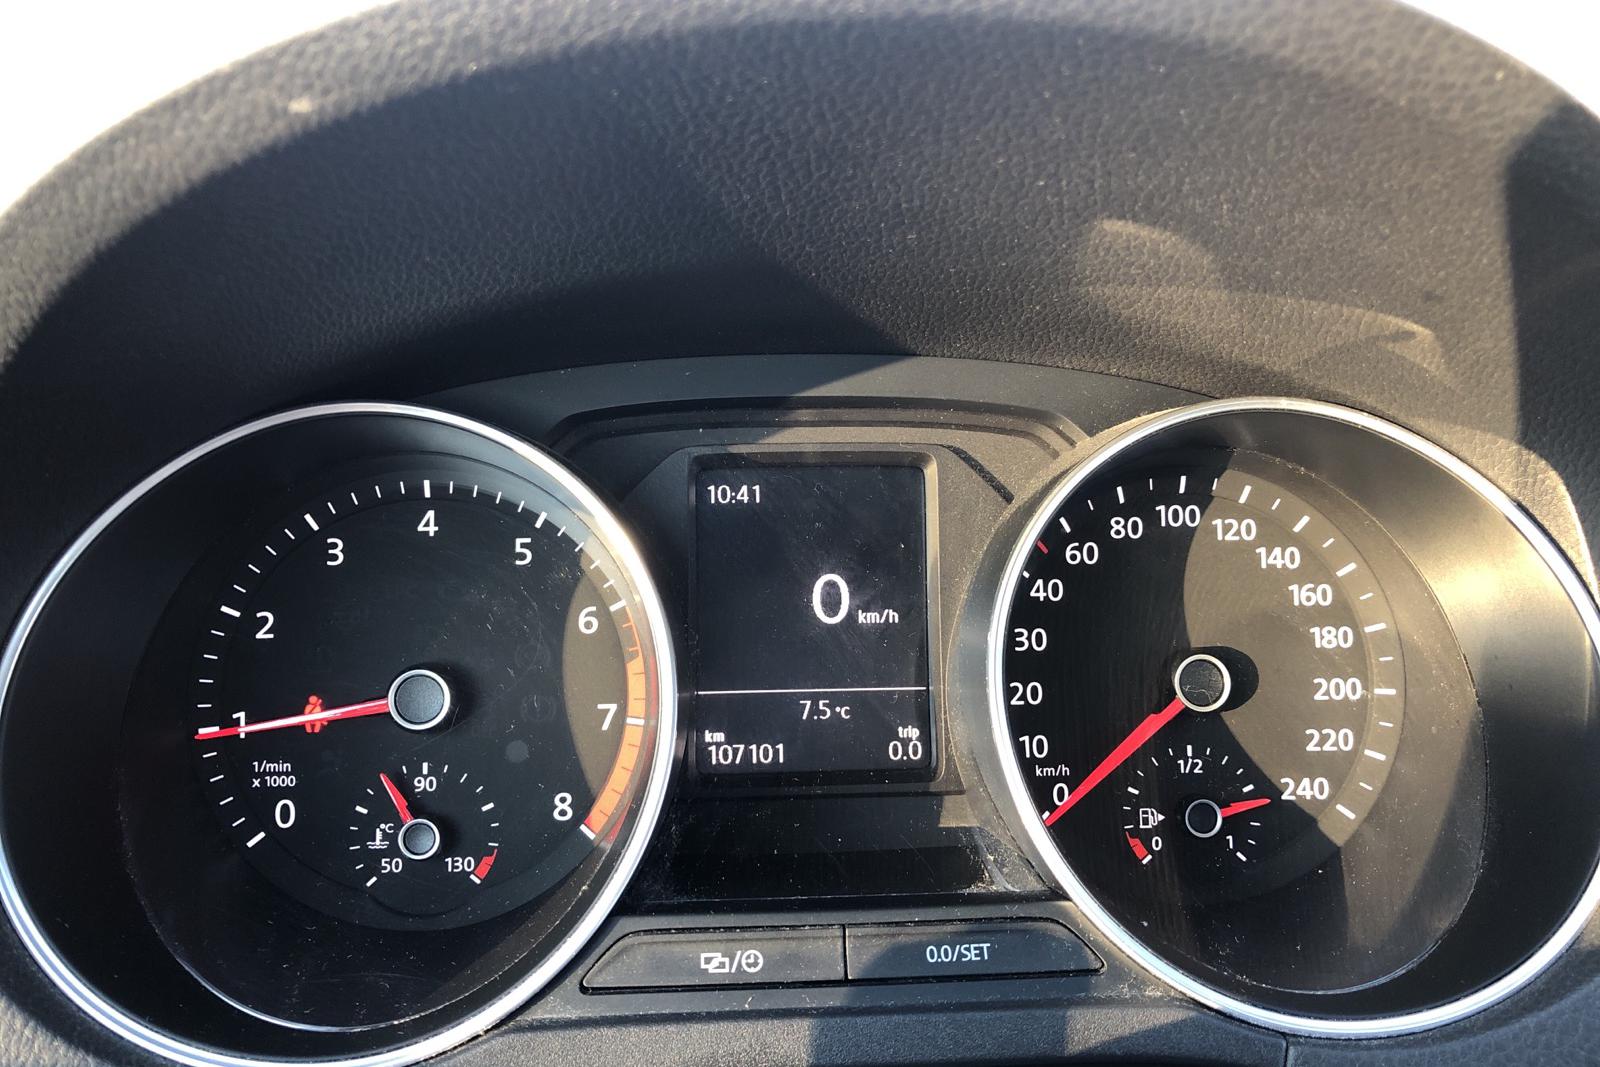 VW Polo 1.2 TSI 5dr (90hk) - 10 710 mil - Manuell - röd - 2015